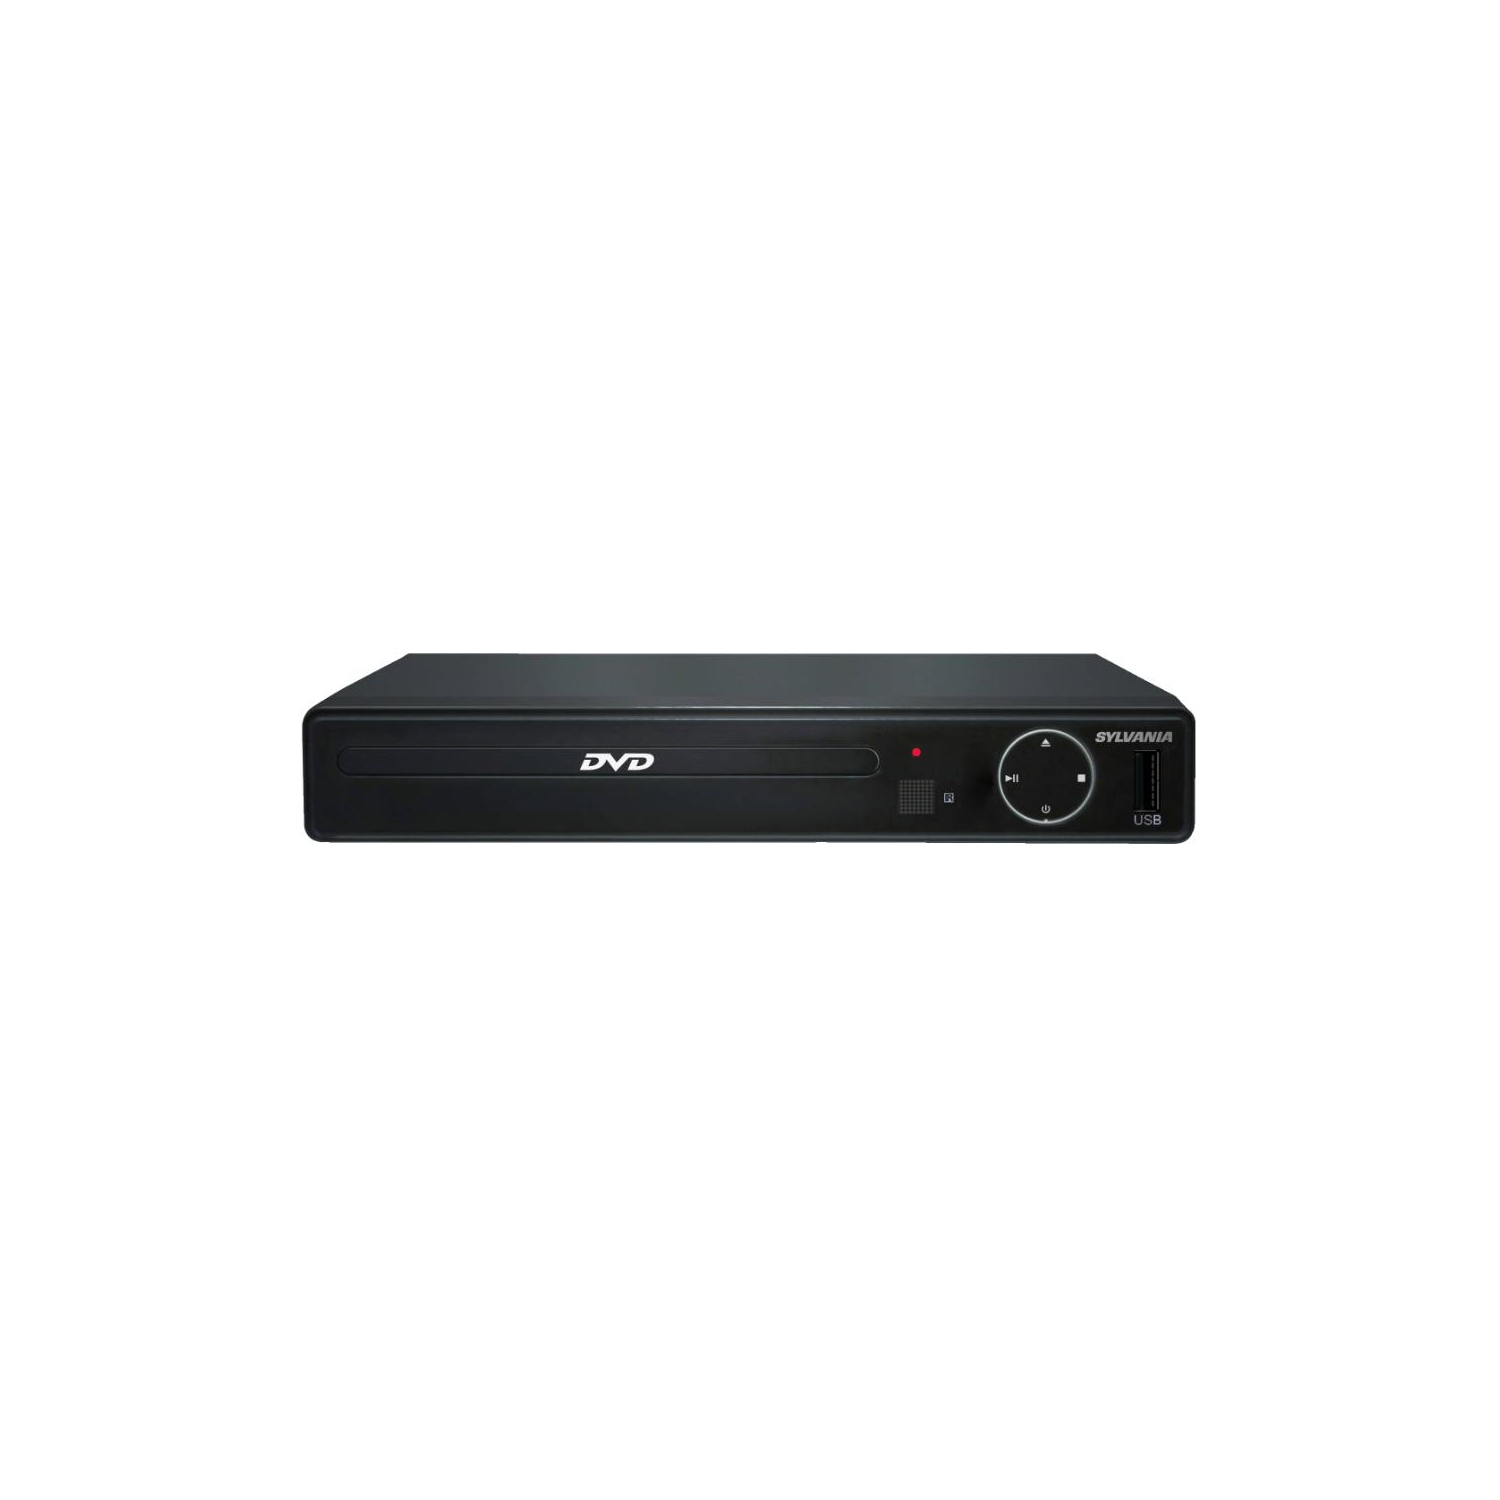 Sylvania HDMI DVD Player with USB Port for Digital Media Playback - Black